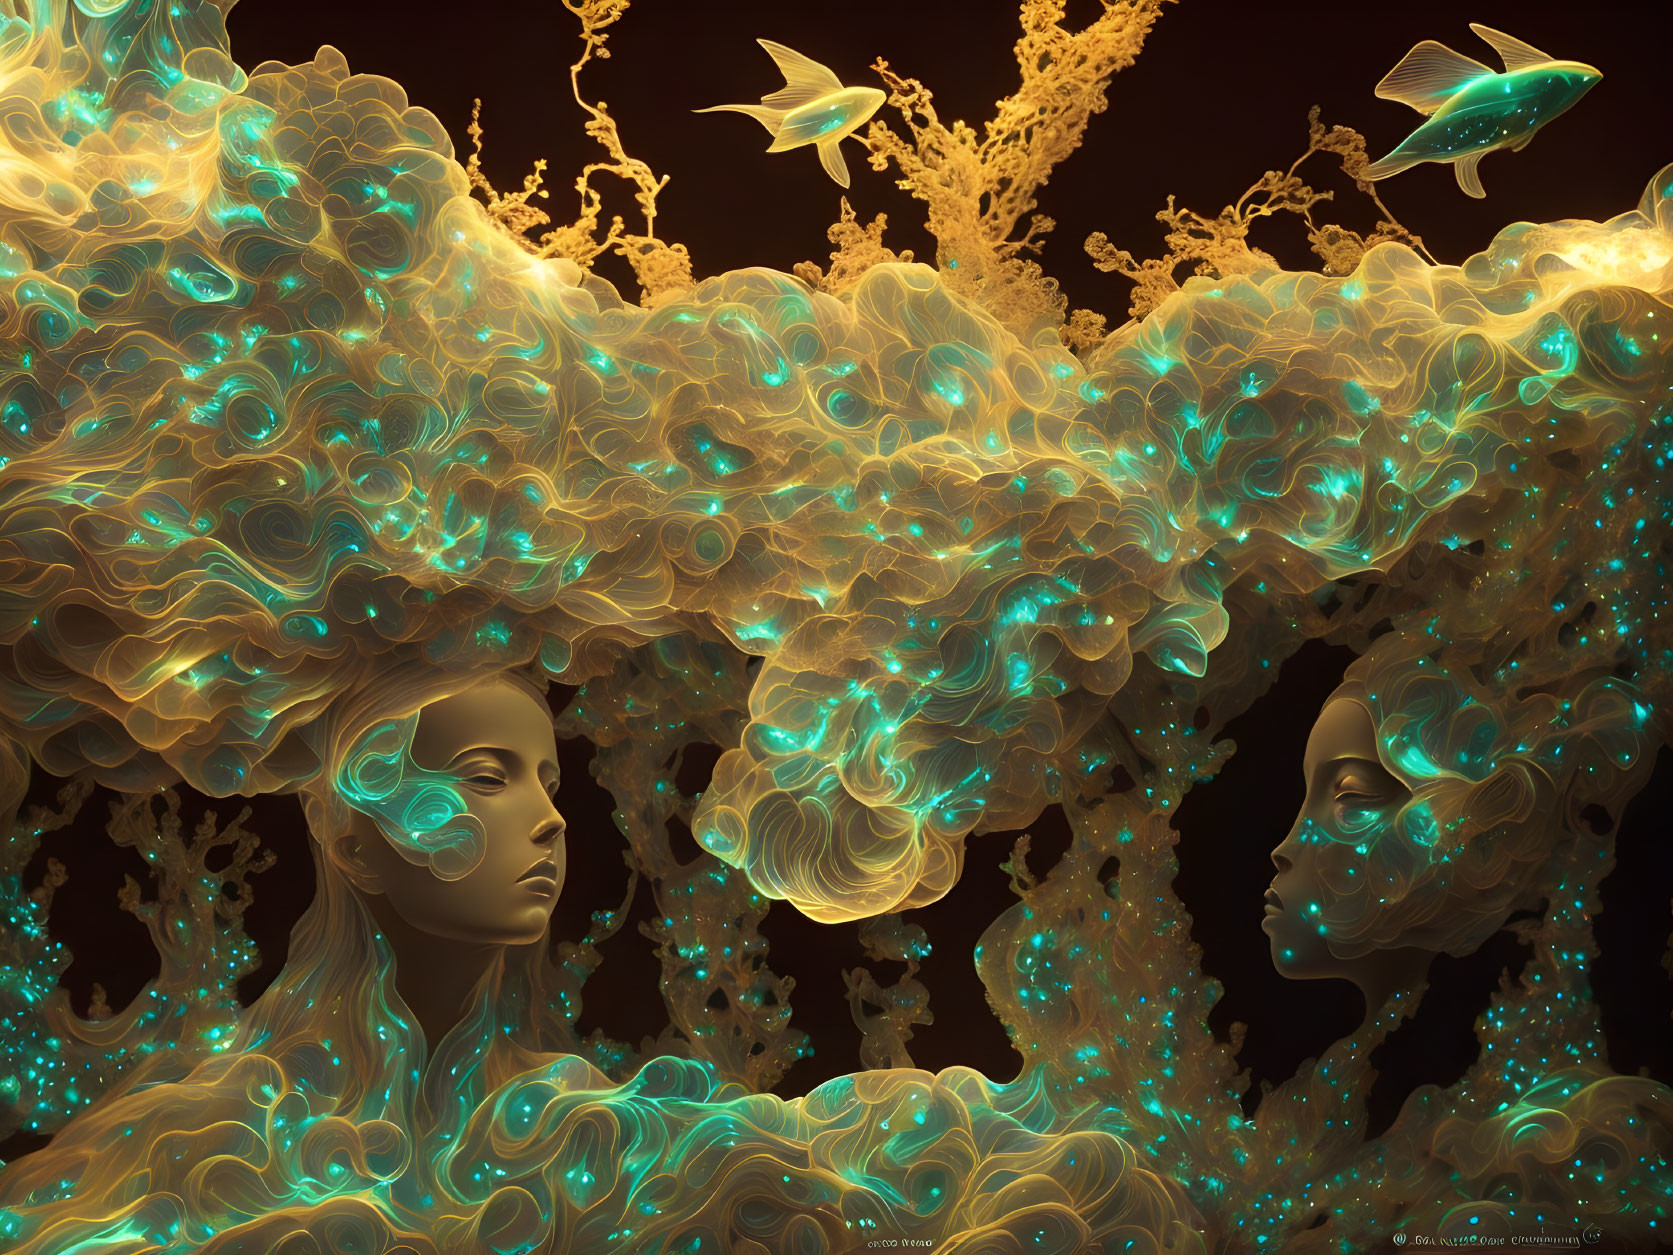 Surreal digital artwork: serene faces in golden underwater scene